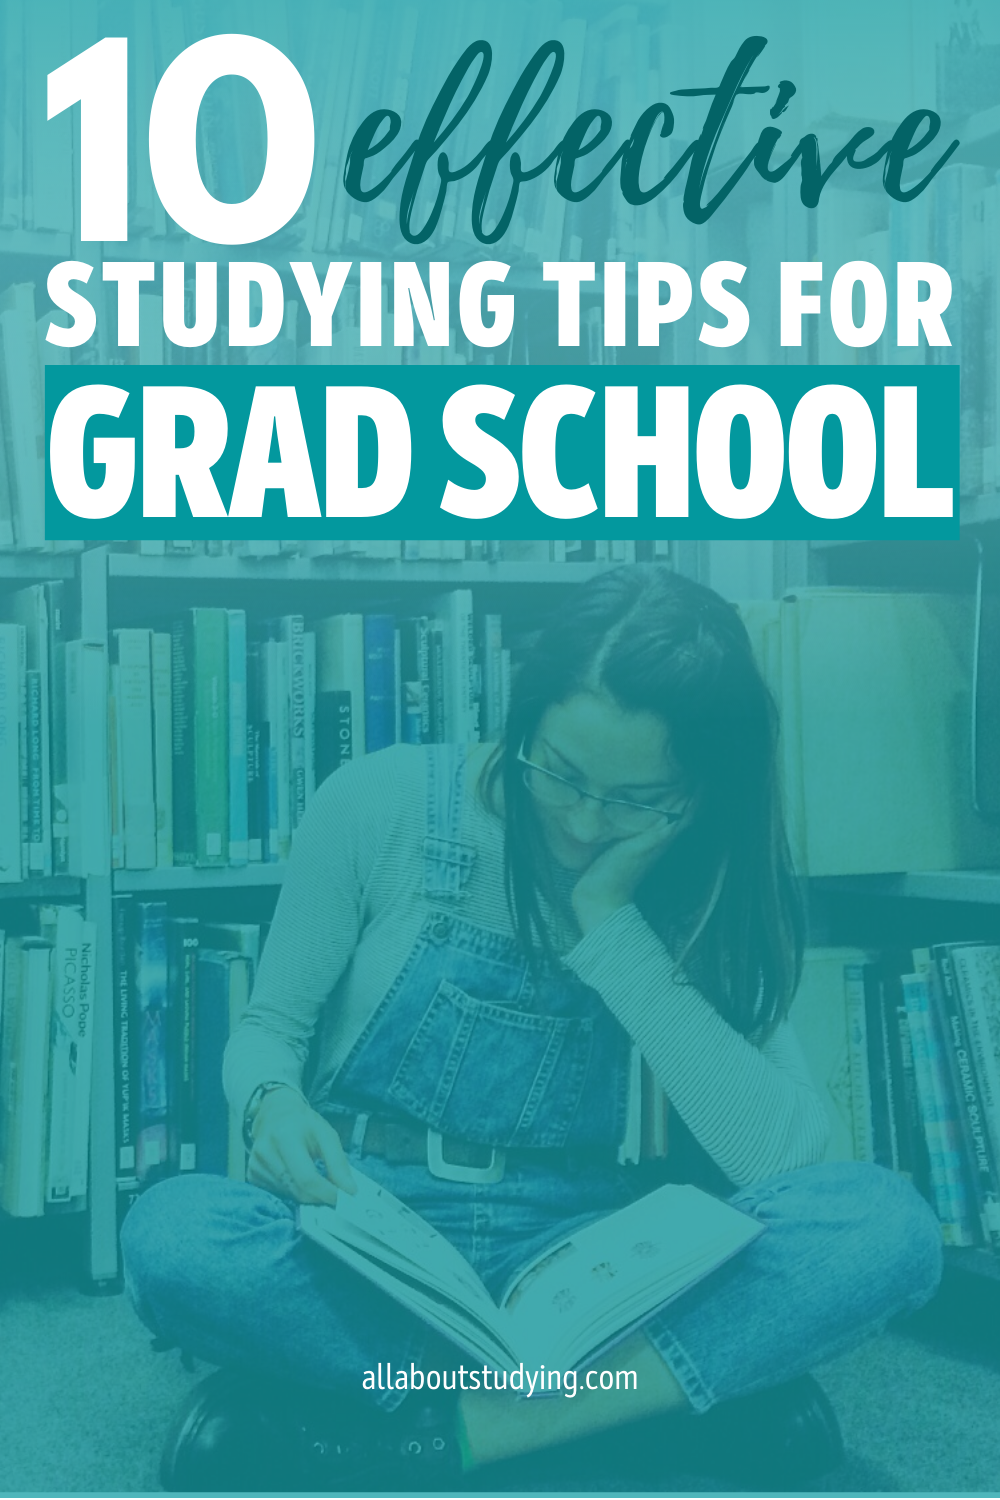 Graduate School Advice_ 10 Studying Tips For Grad Students #gradschool #gradschoolife #studytips #studying #studymotivation #gradstudent